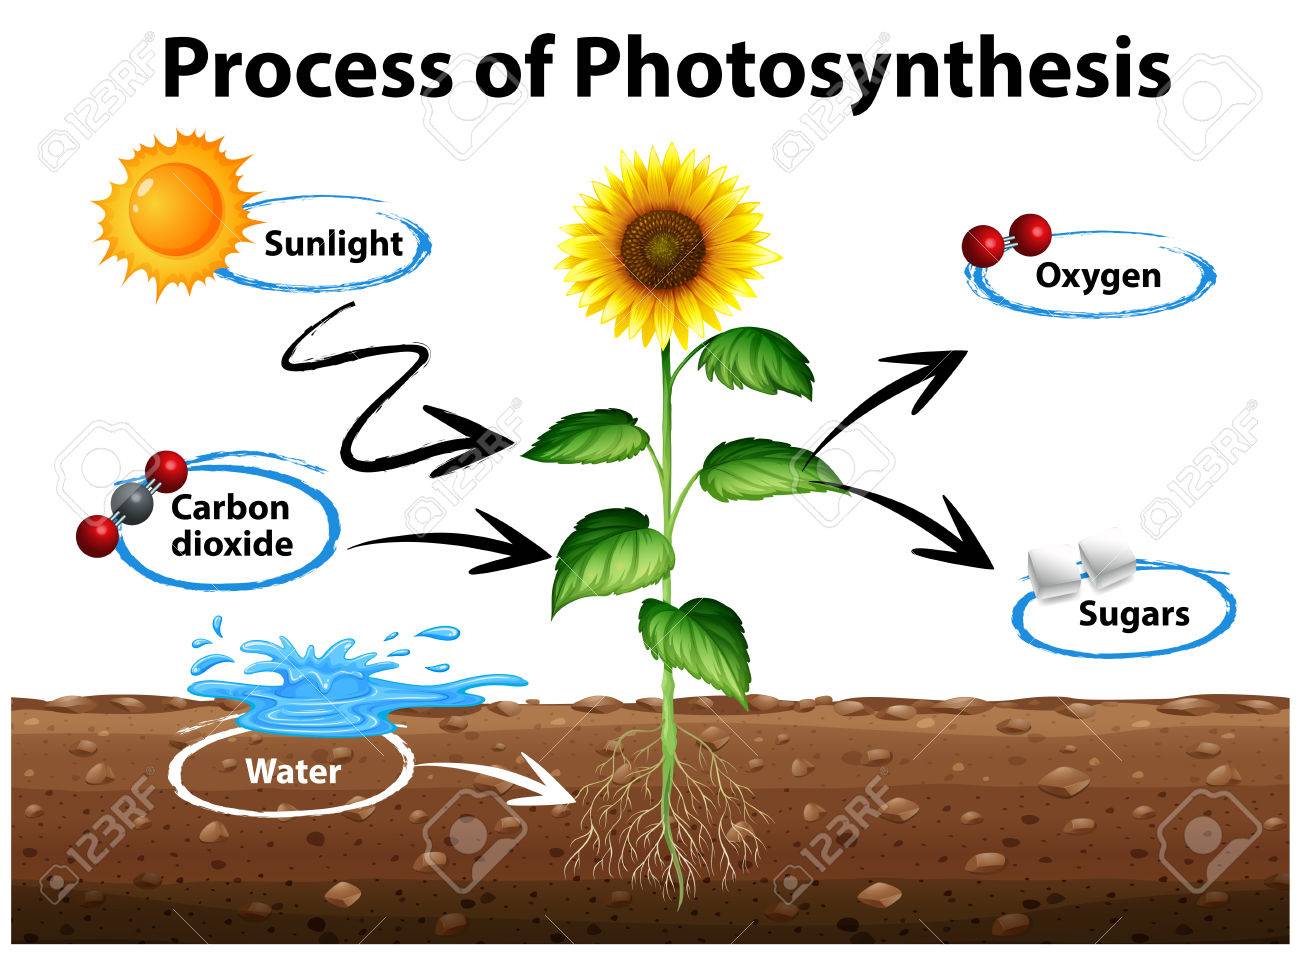 fotosíntesis 2